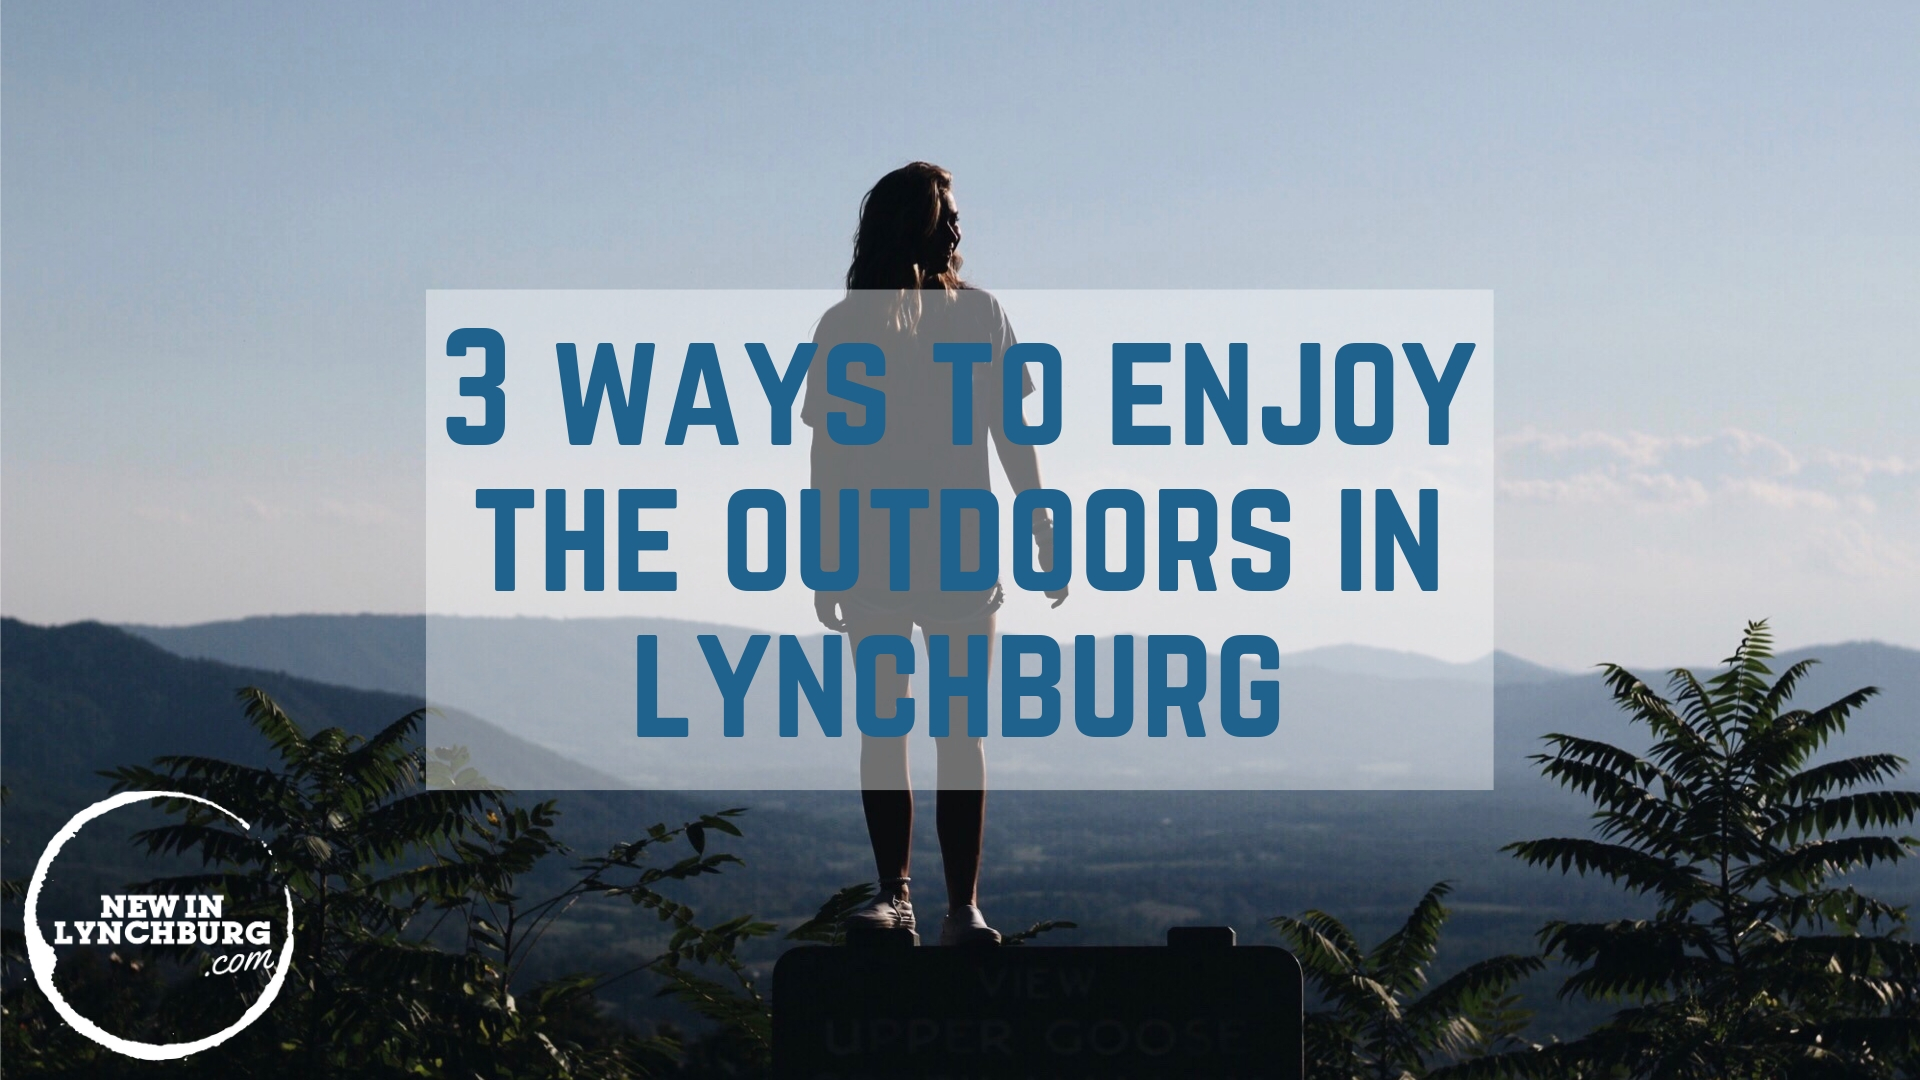 3 ways to enjoy the outdoors.jpg